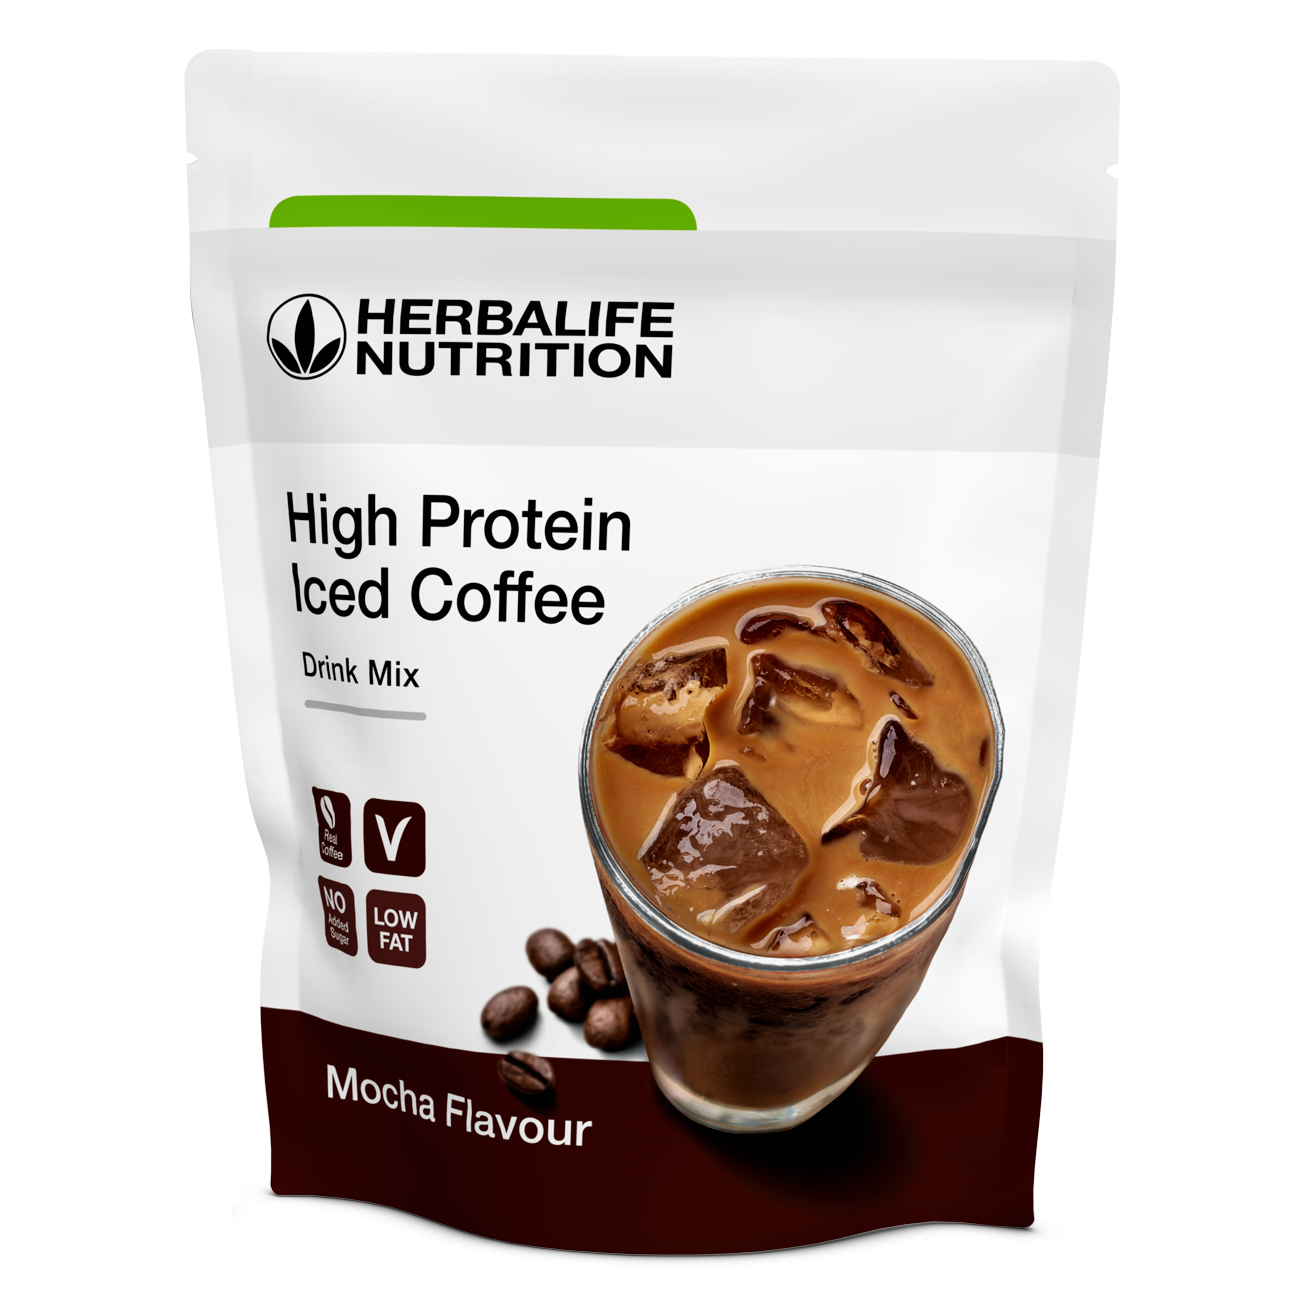 High Protein Iced Coffee Bebida de café gelado Mocha product shot